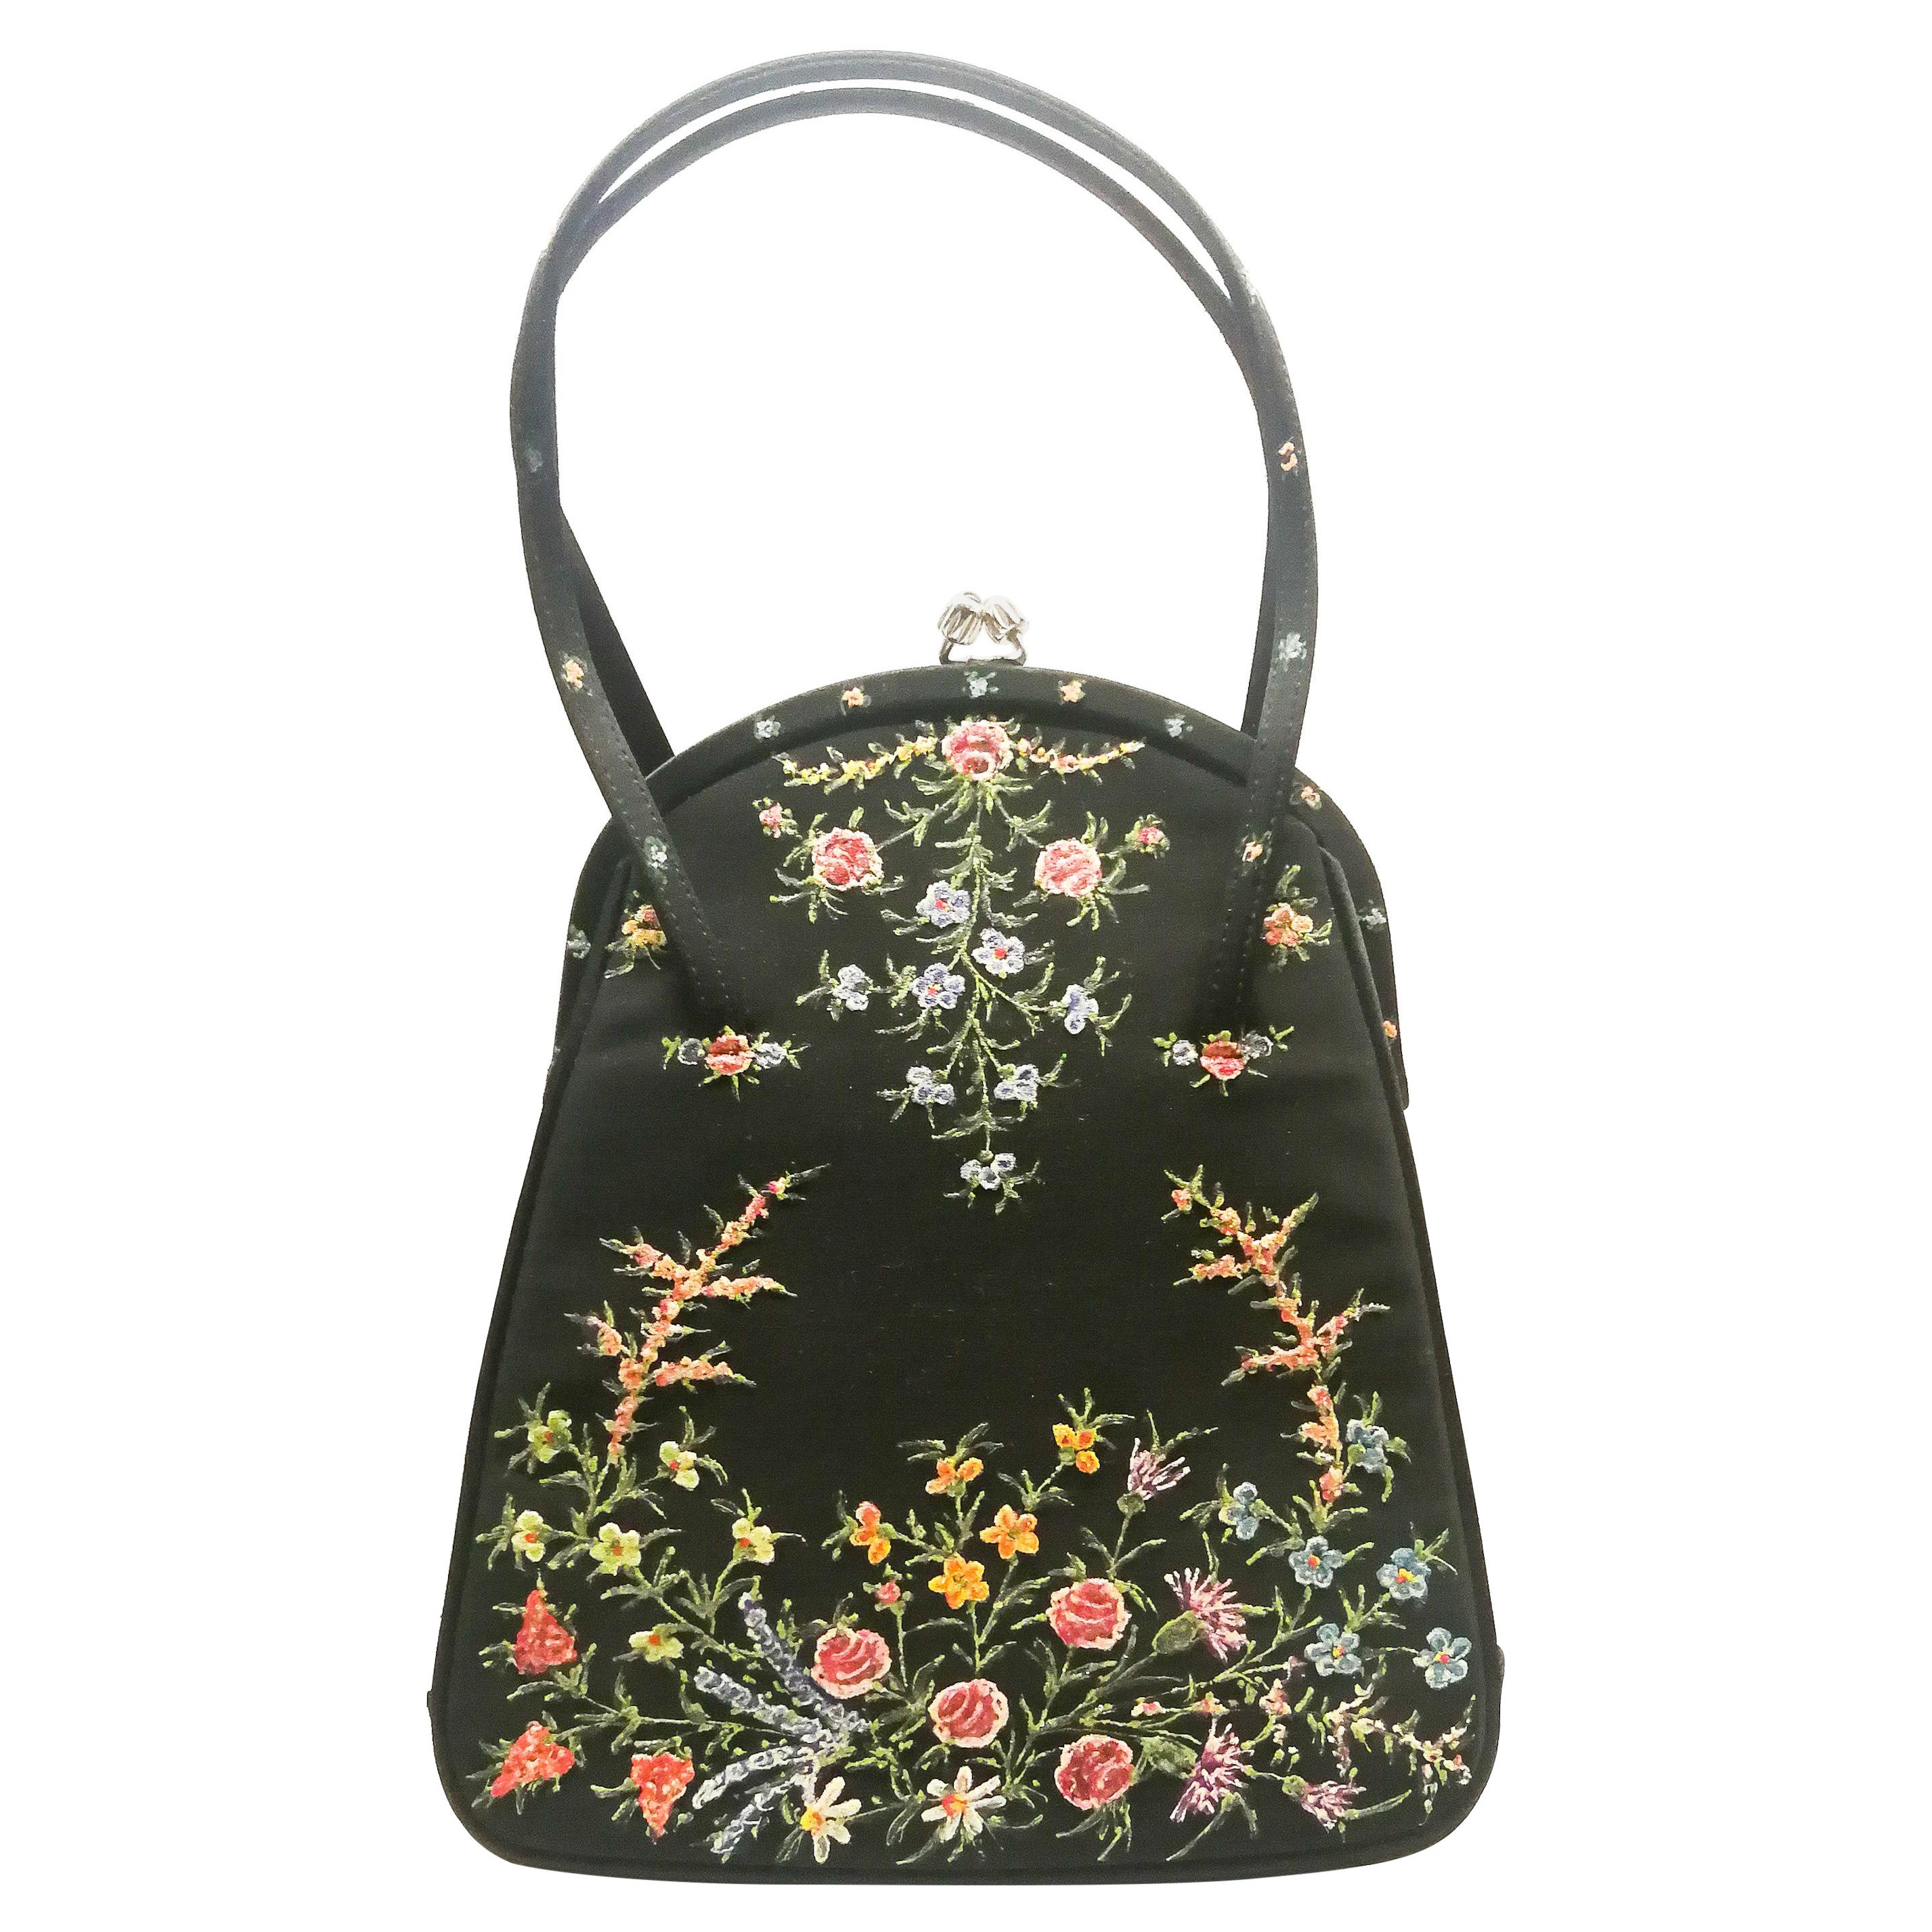 Hand Painted Handbag Purse Shoulder Bag Funky Abstract | Etsy | Painted  handbag, Bags, Handpainted bags